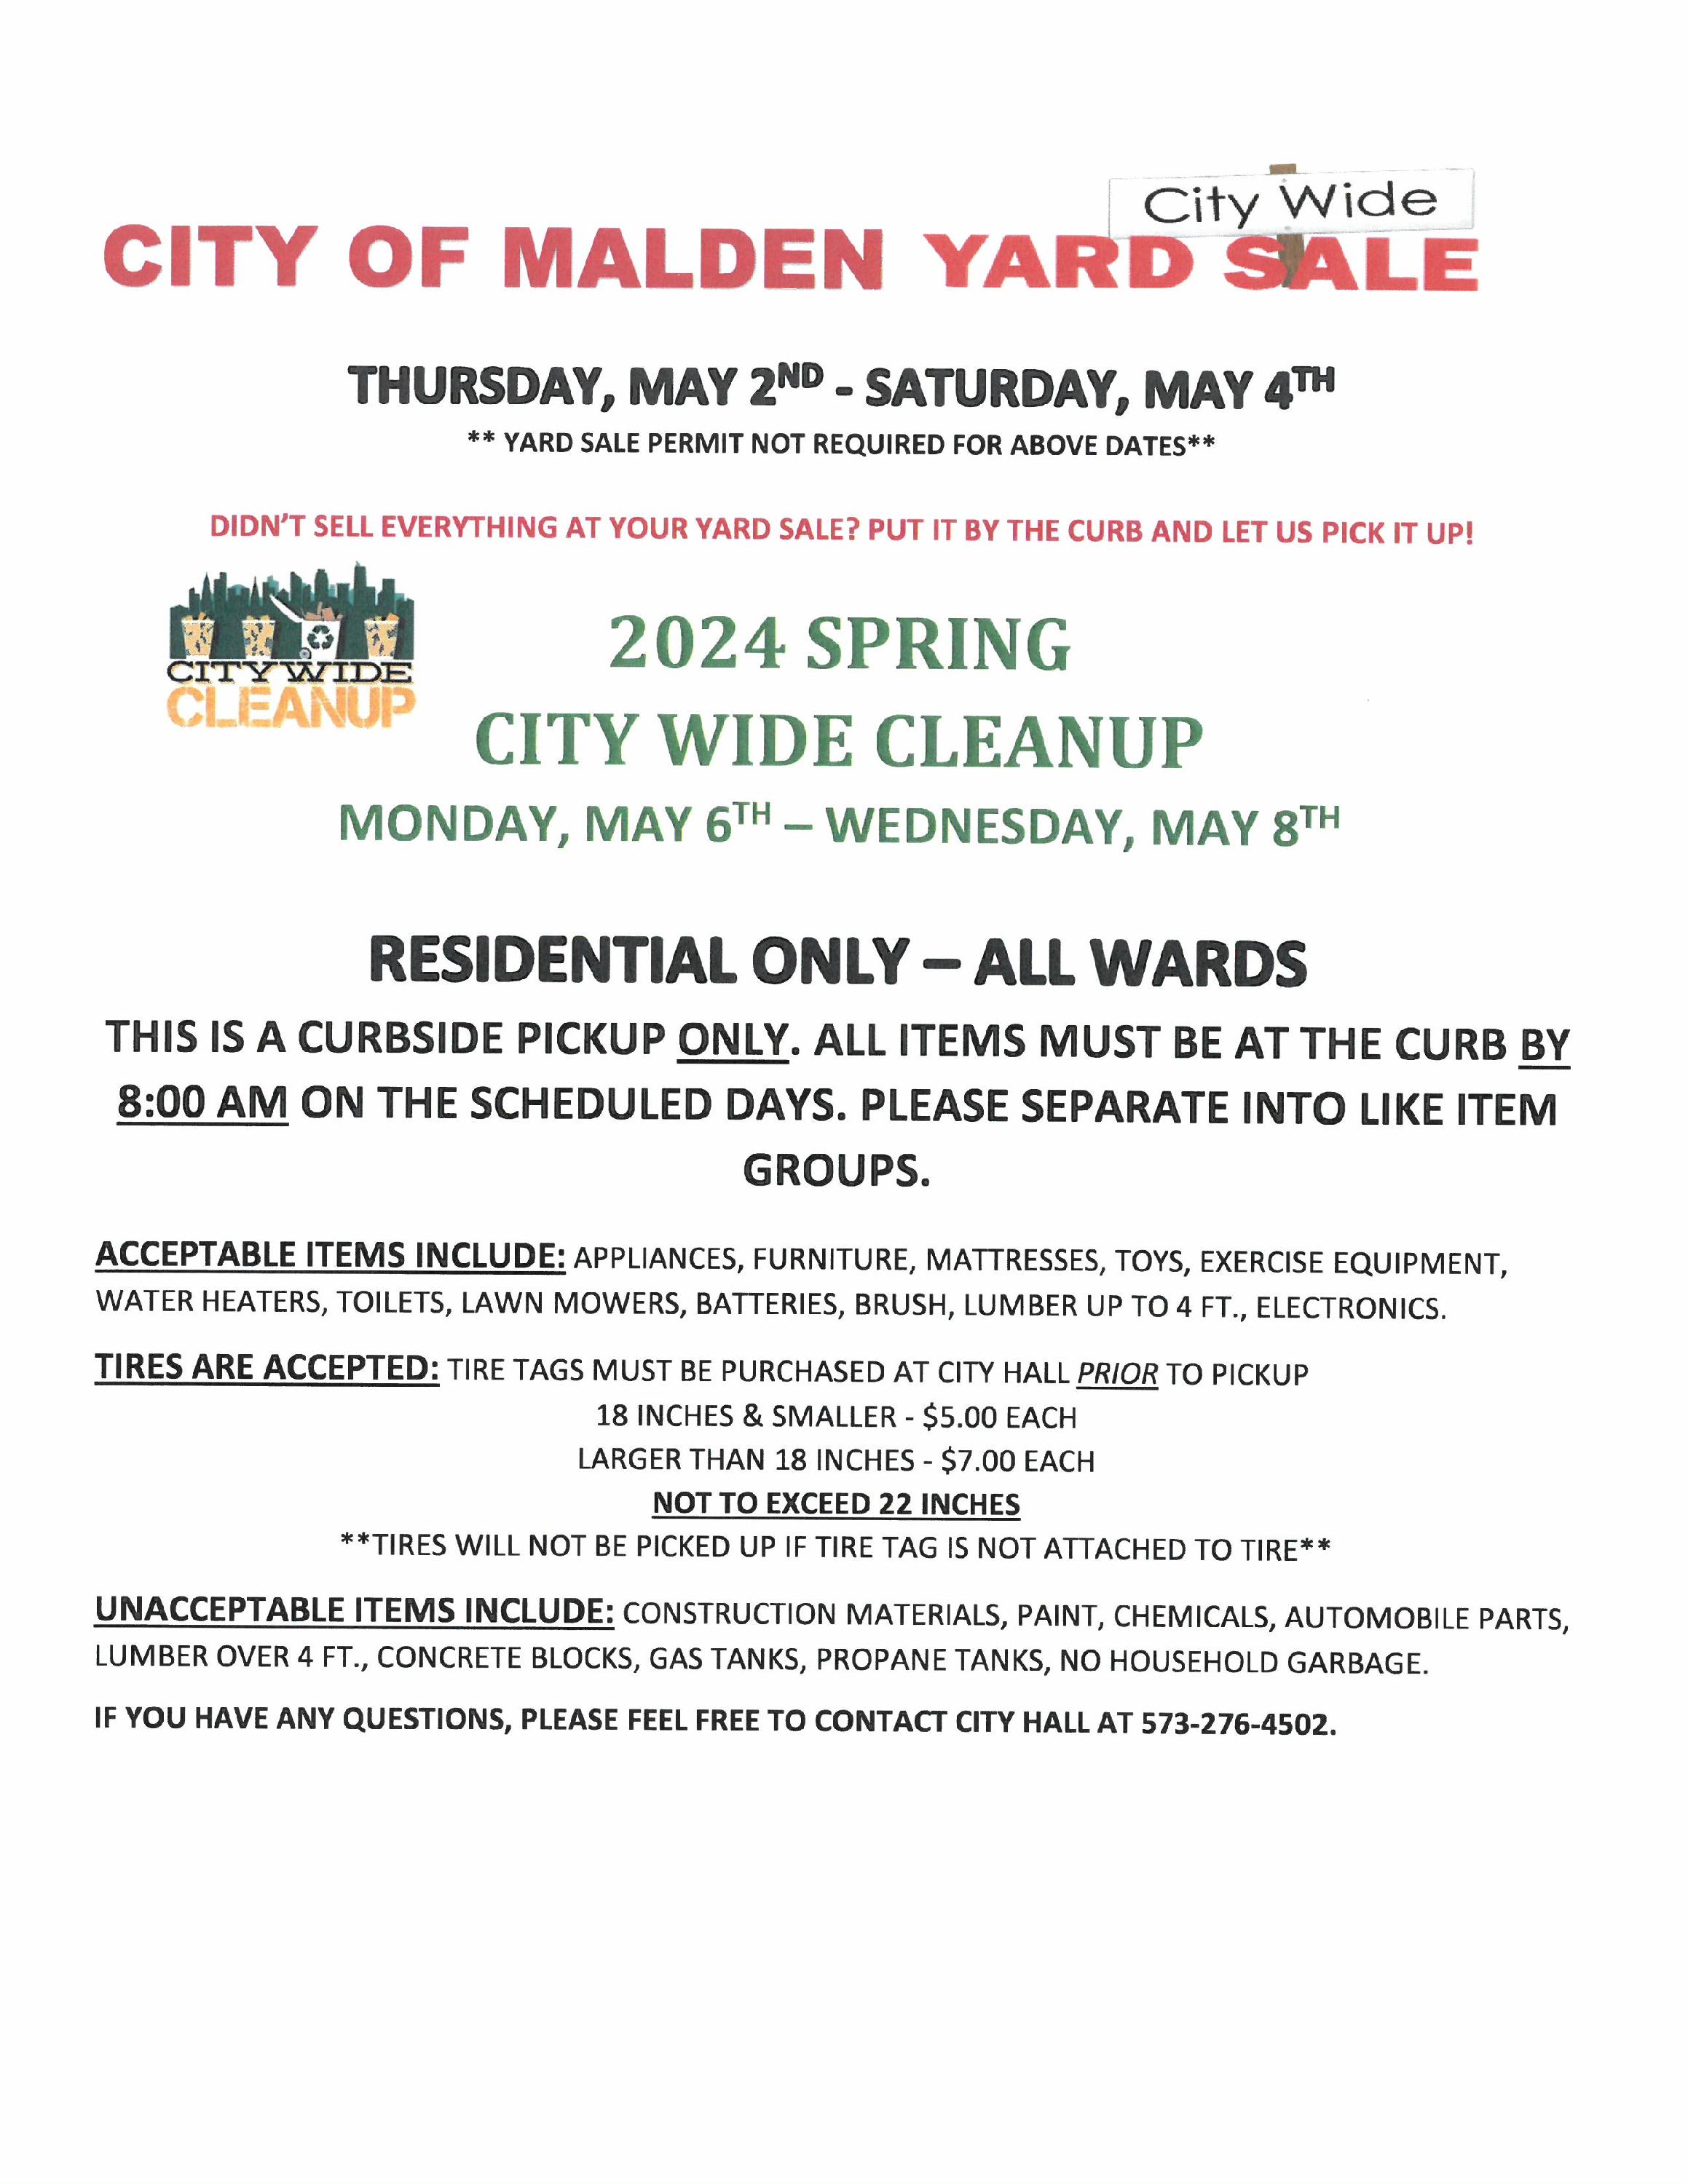 2024 Yard Sale & Cleanup